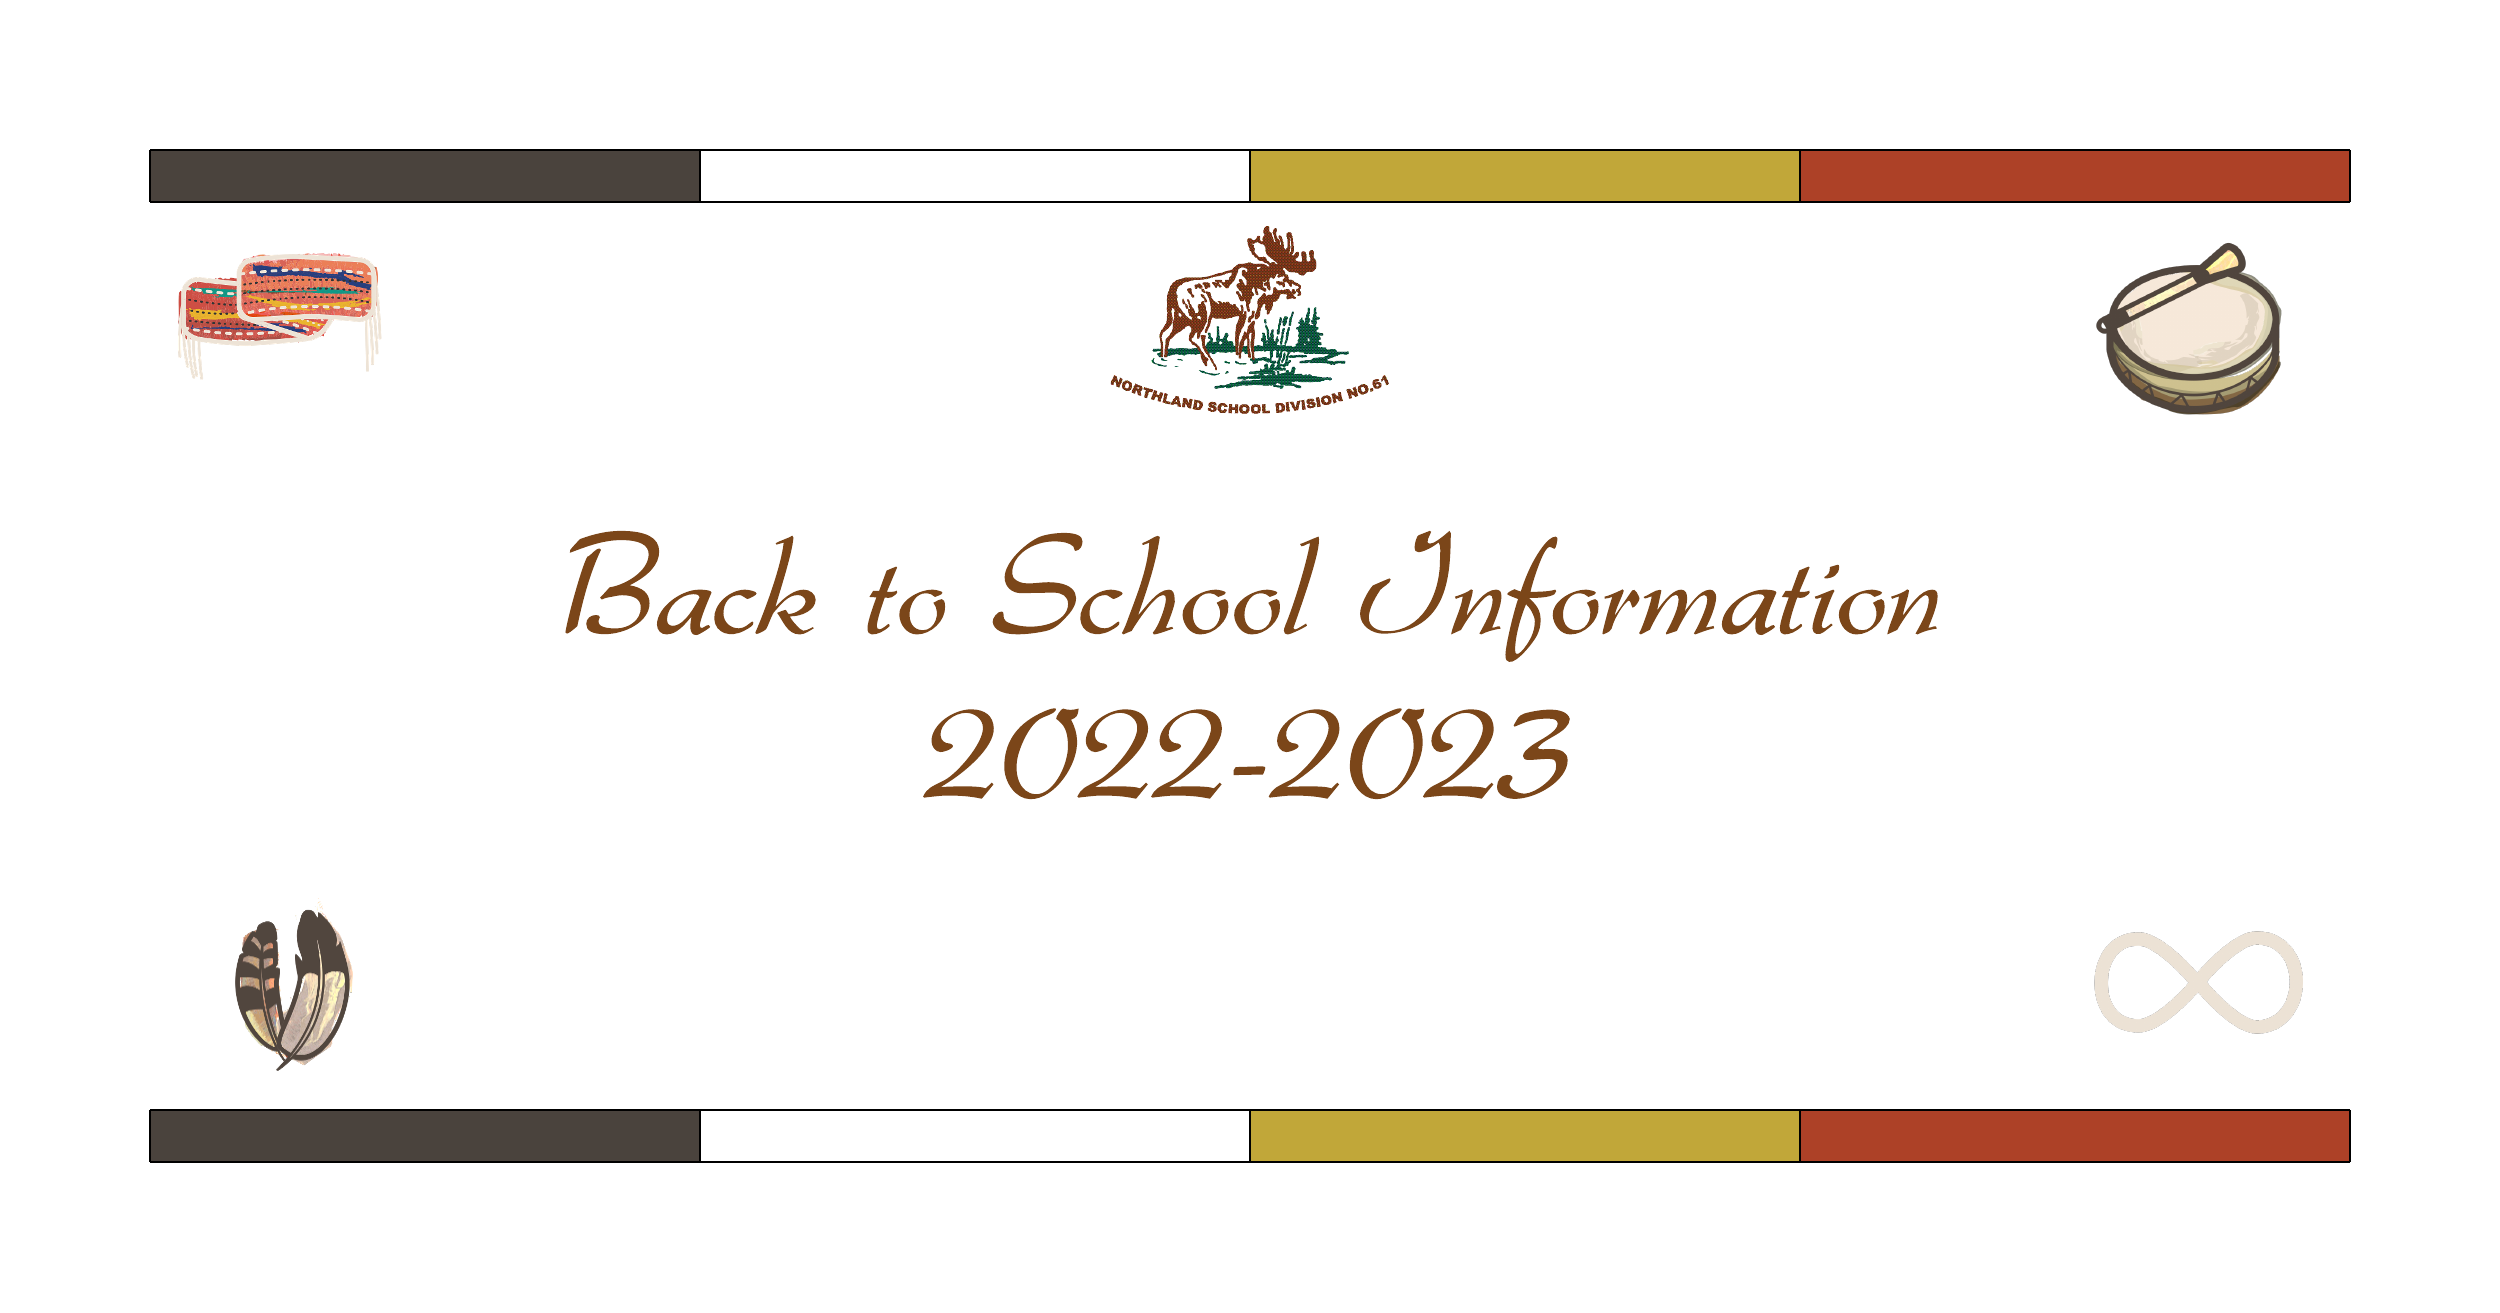 2022-2023-back-to-school-information-northland-school-division